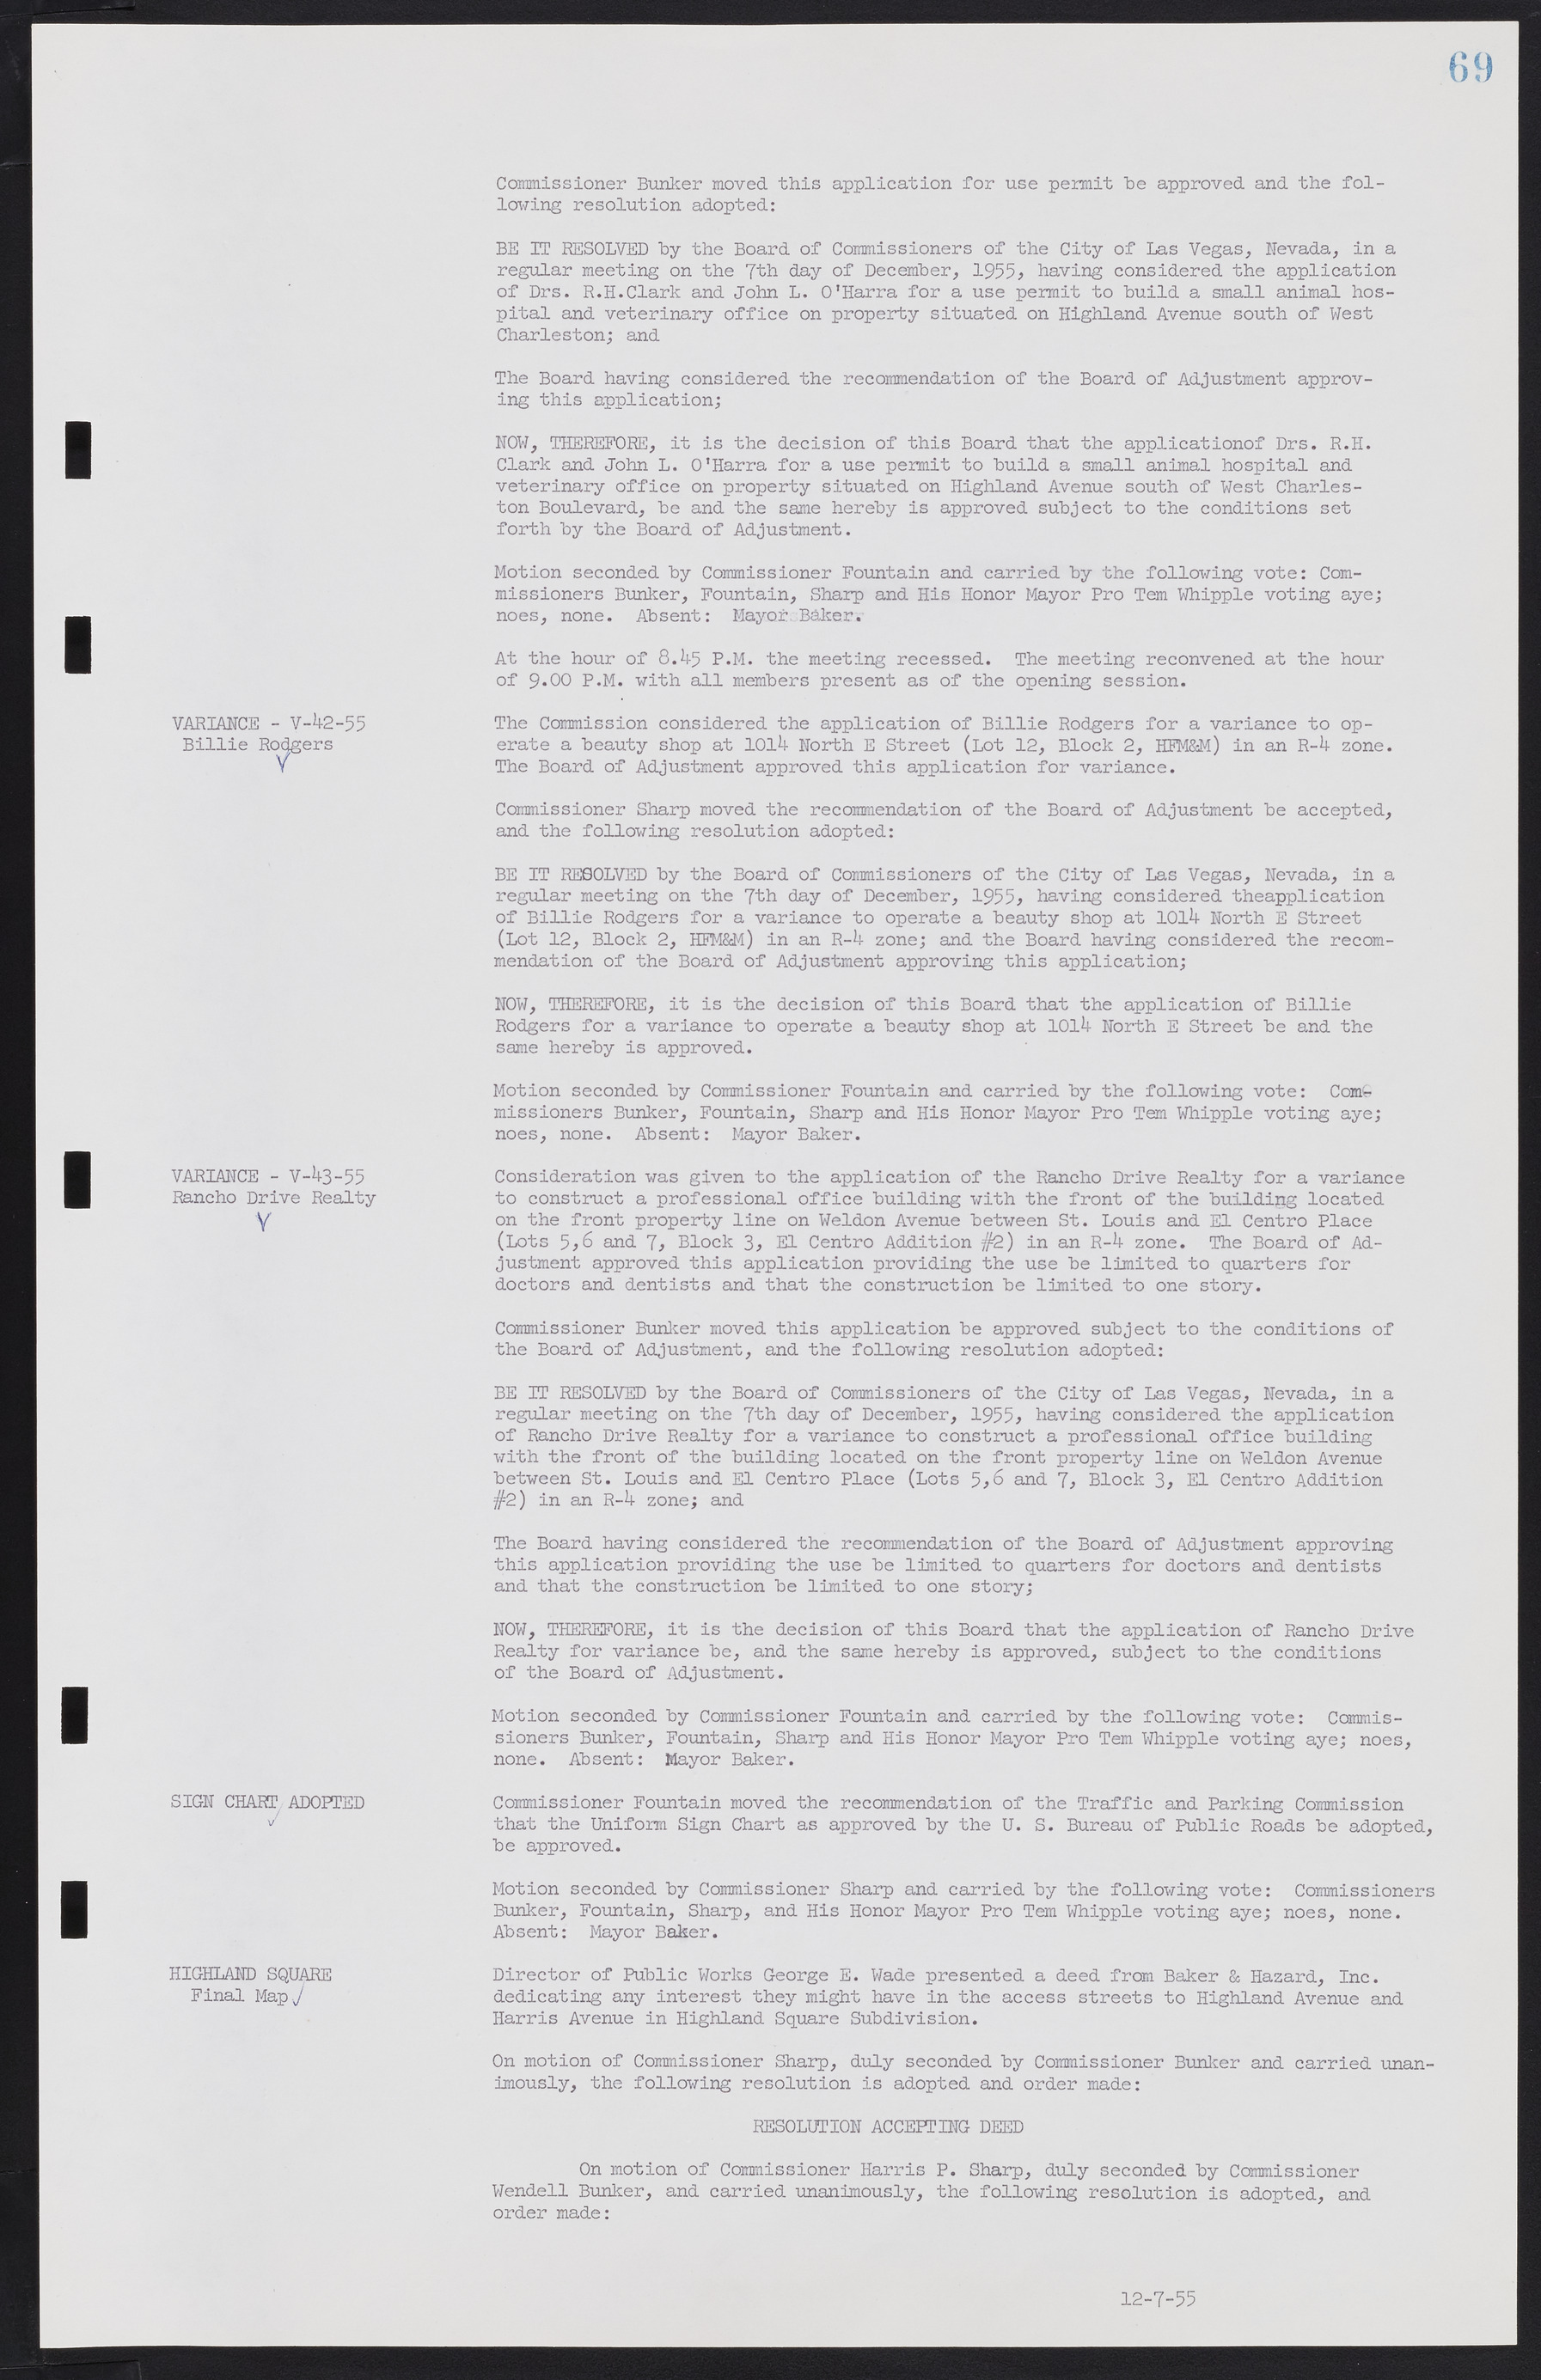 Las Vegas City Commission Minutes, September 21, 1955 to November 20, 1957, lvc000010-79